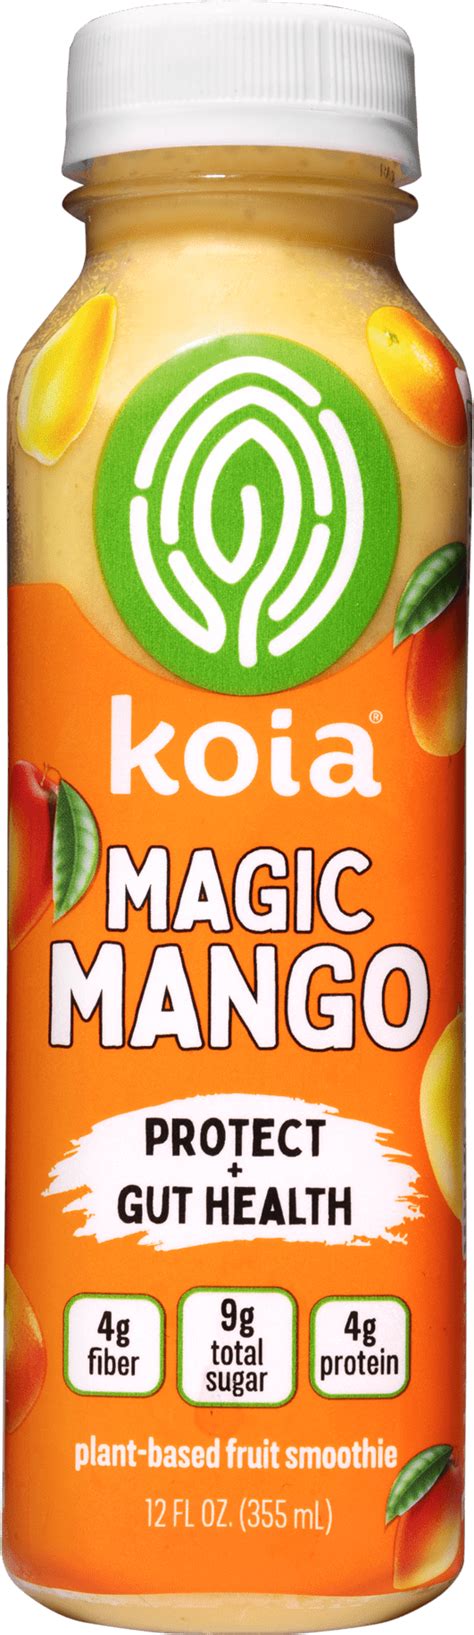 The science behind the taste of Koia magic mango